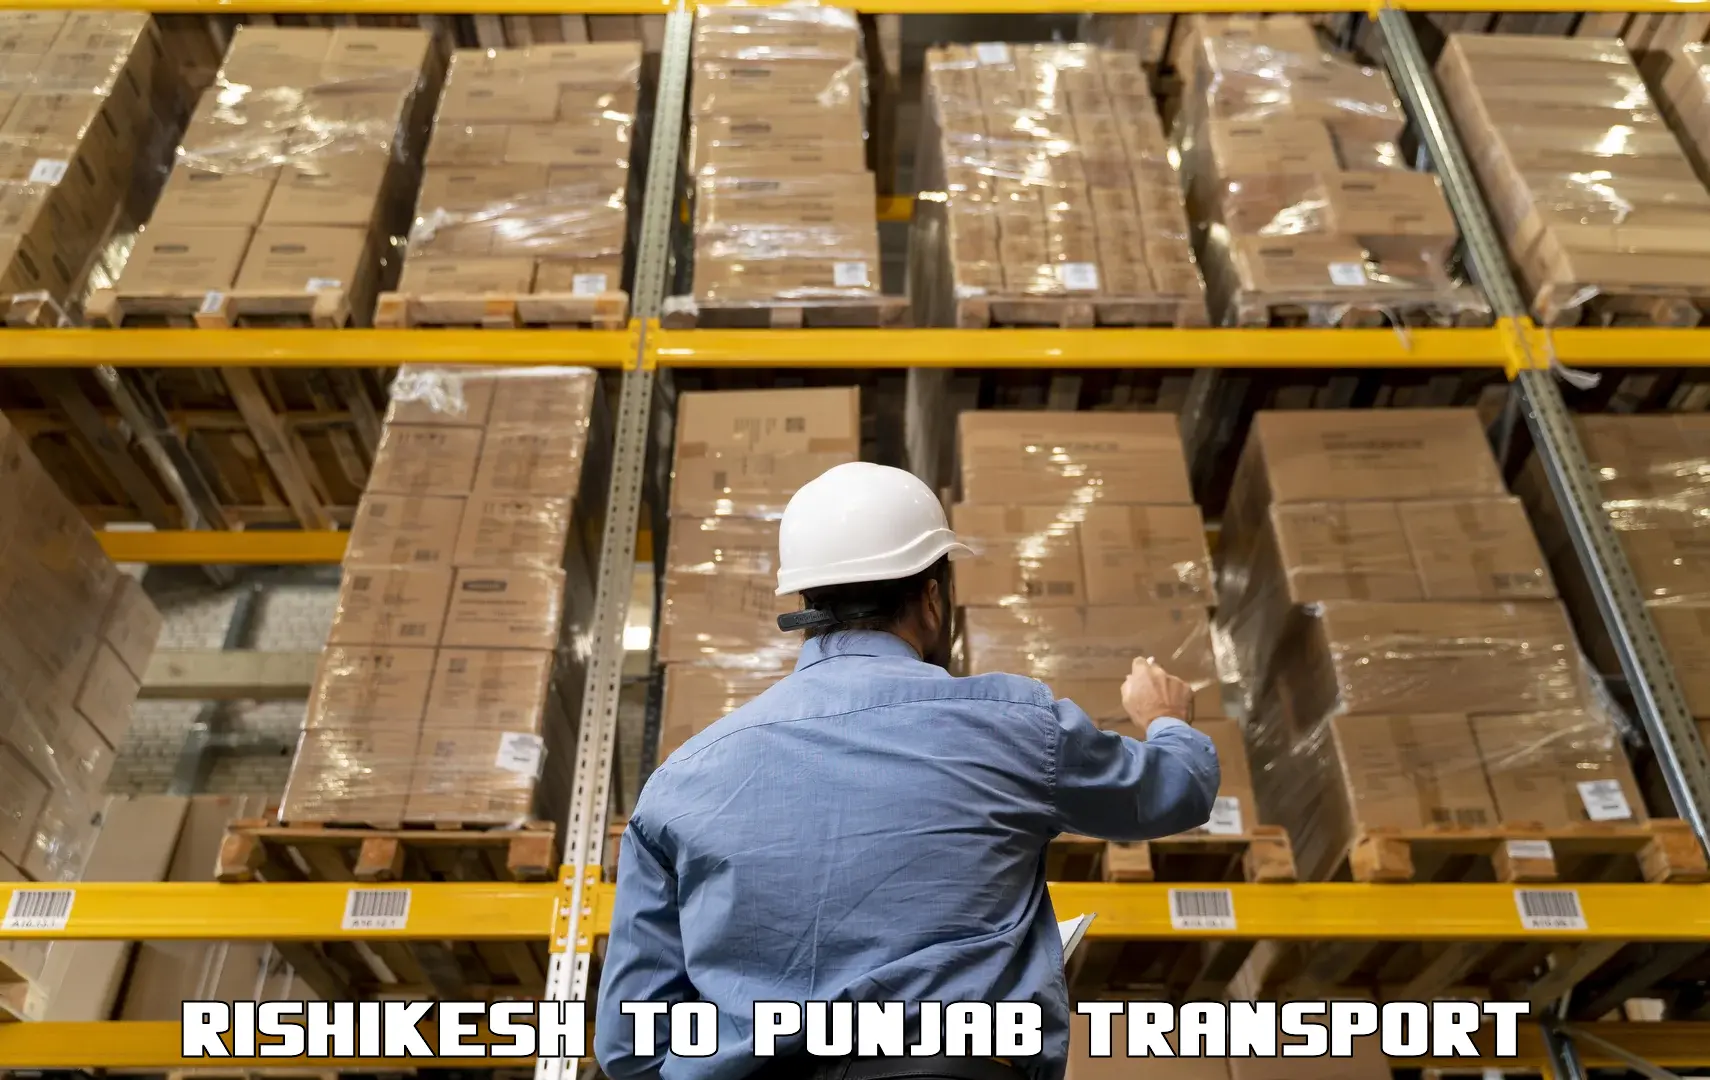 Nearby transport service Rishikesh to Punjab